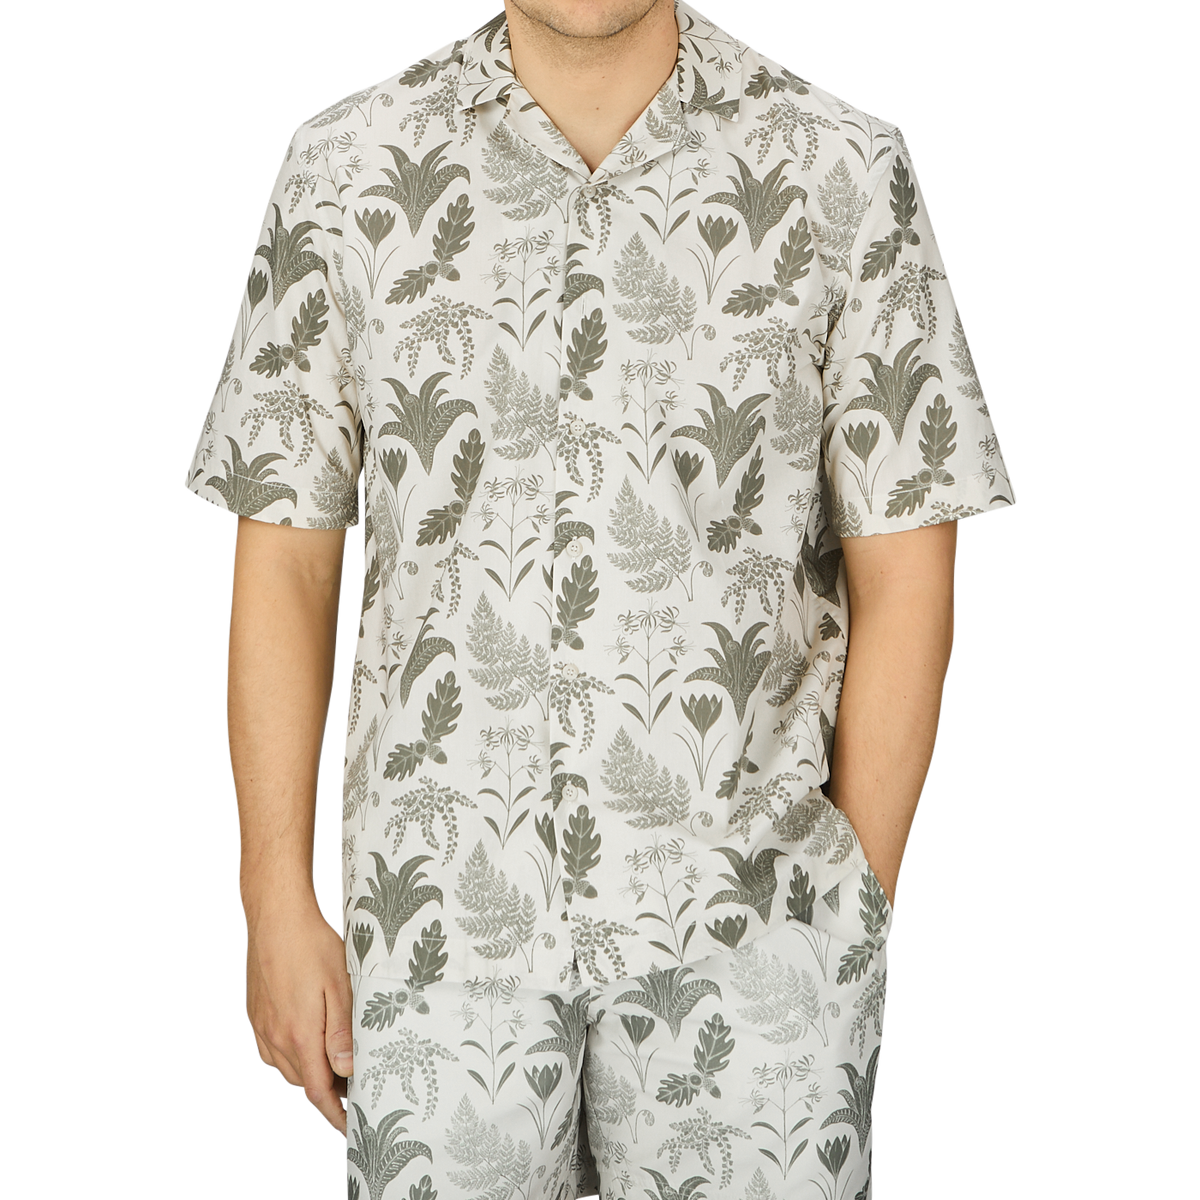 Men's short sleeve Hawaiian print pajamas inspired by botanical artist Katie Scott from Sunspel featuring the Ecru Katie Scott Printed Resort Shirt.